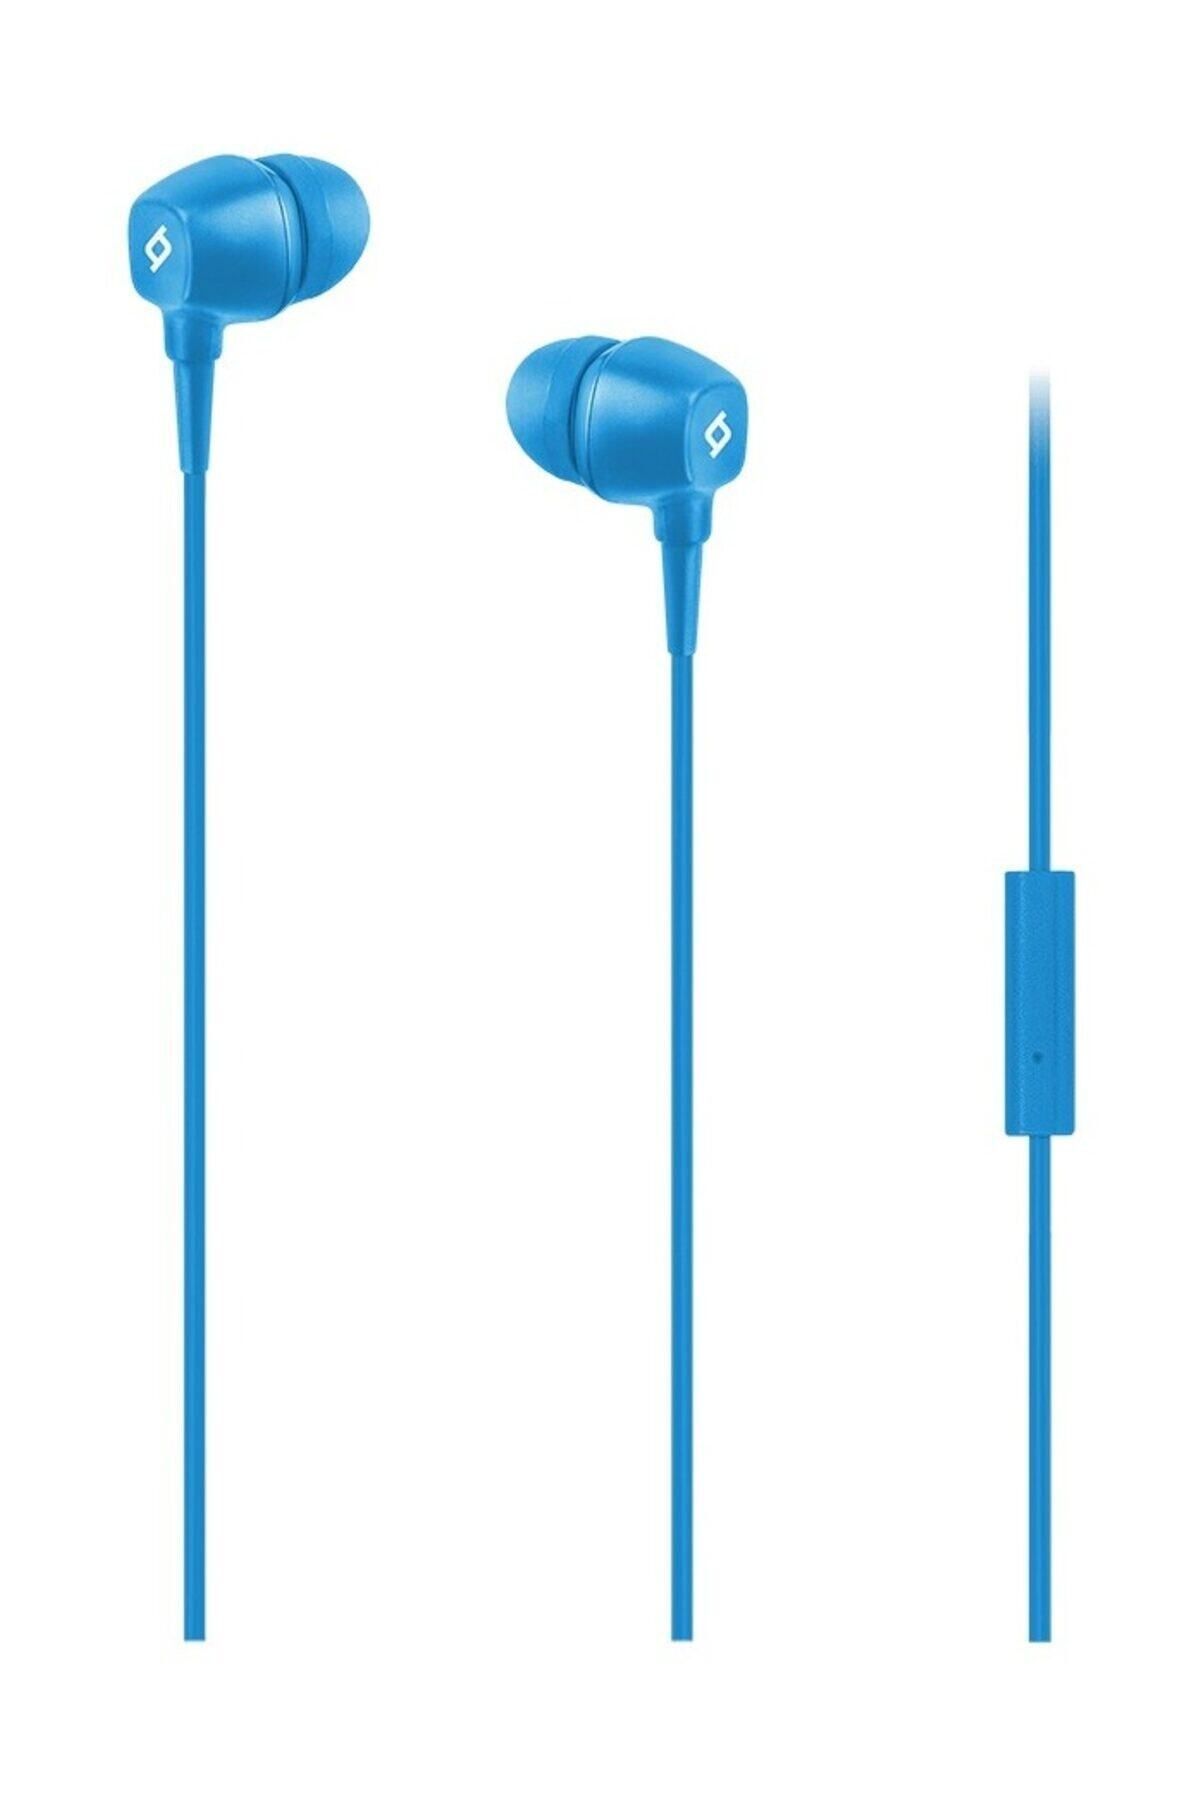 Ttec Pop Mikrofonlu Kulakiçi Kulaklık 3.5mm Mavi